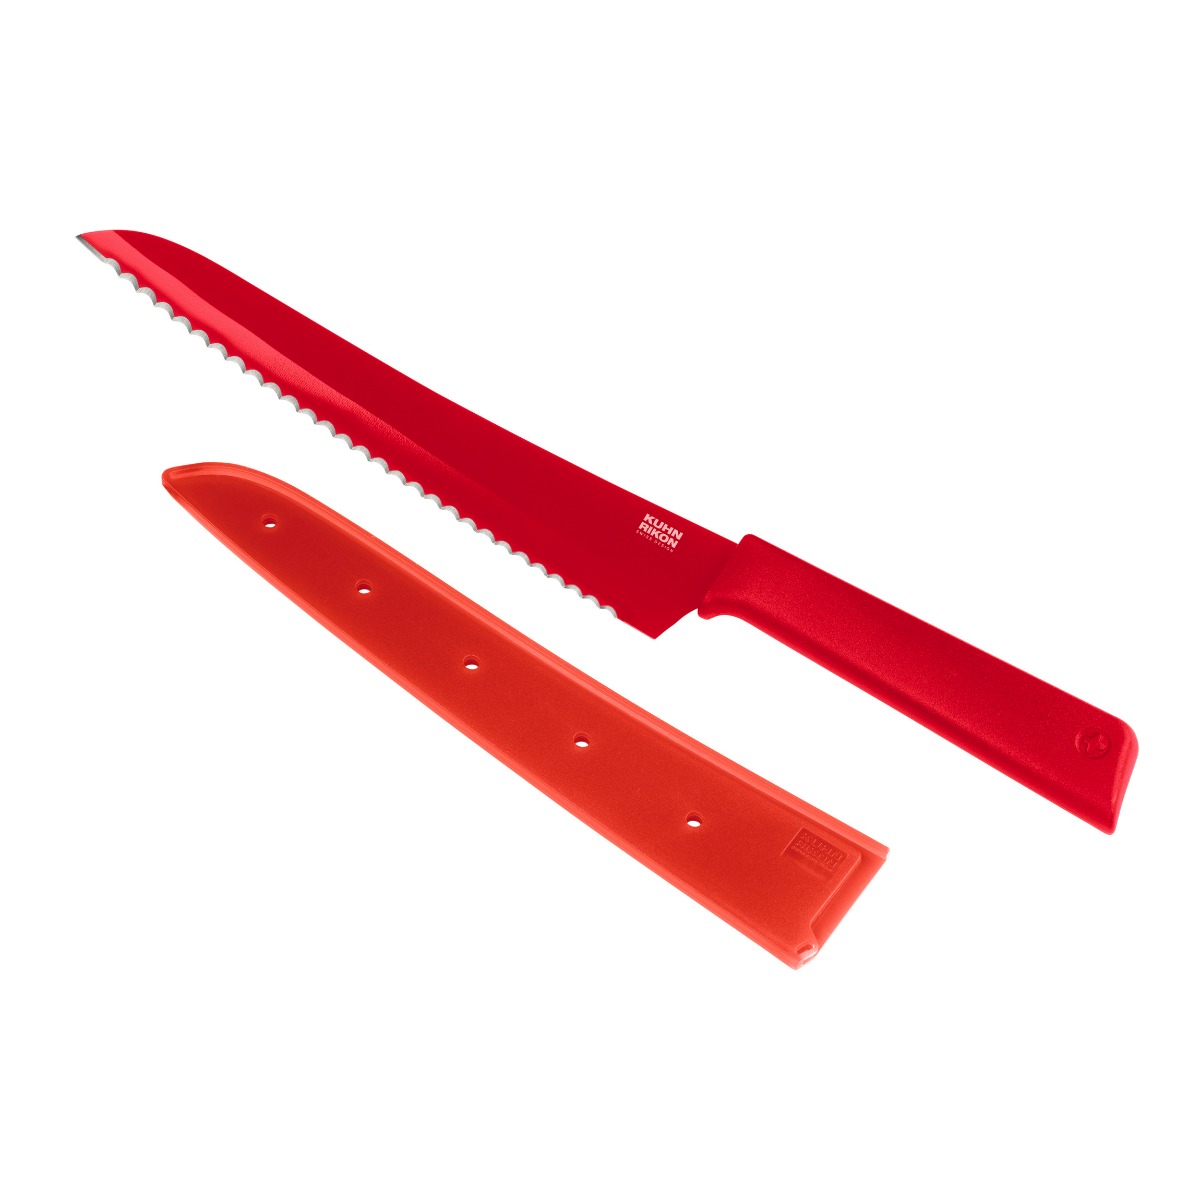 Kuhn Rikon - Colori(r)+ Bread Knife red